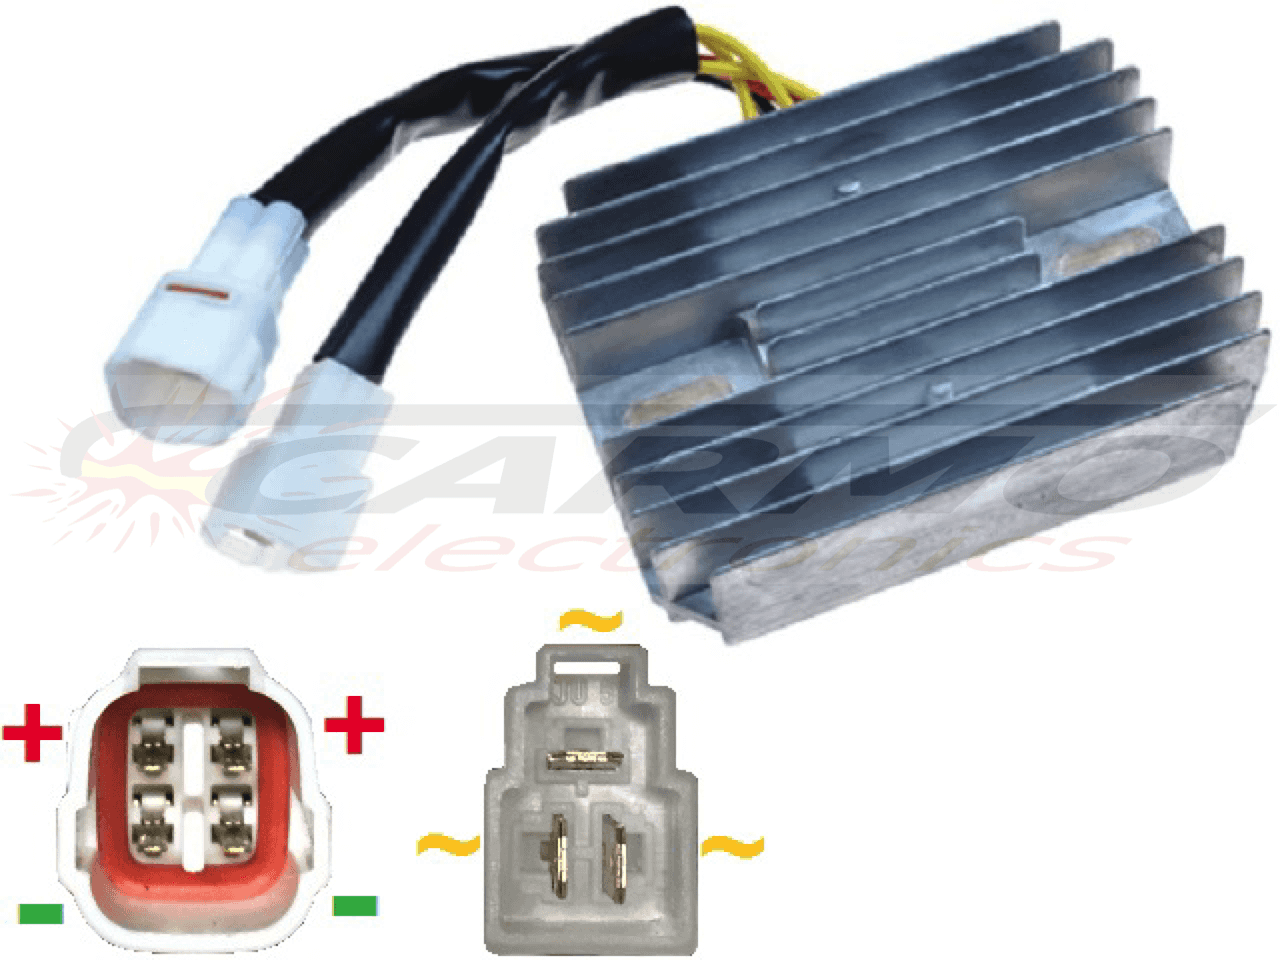 CARR8521 Suzuki MOSFET Spanningsregelaar gelijkrichter - Clique na Imagem para Fechar